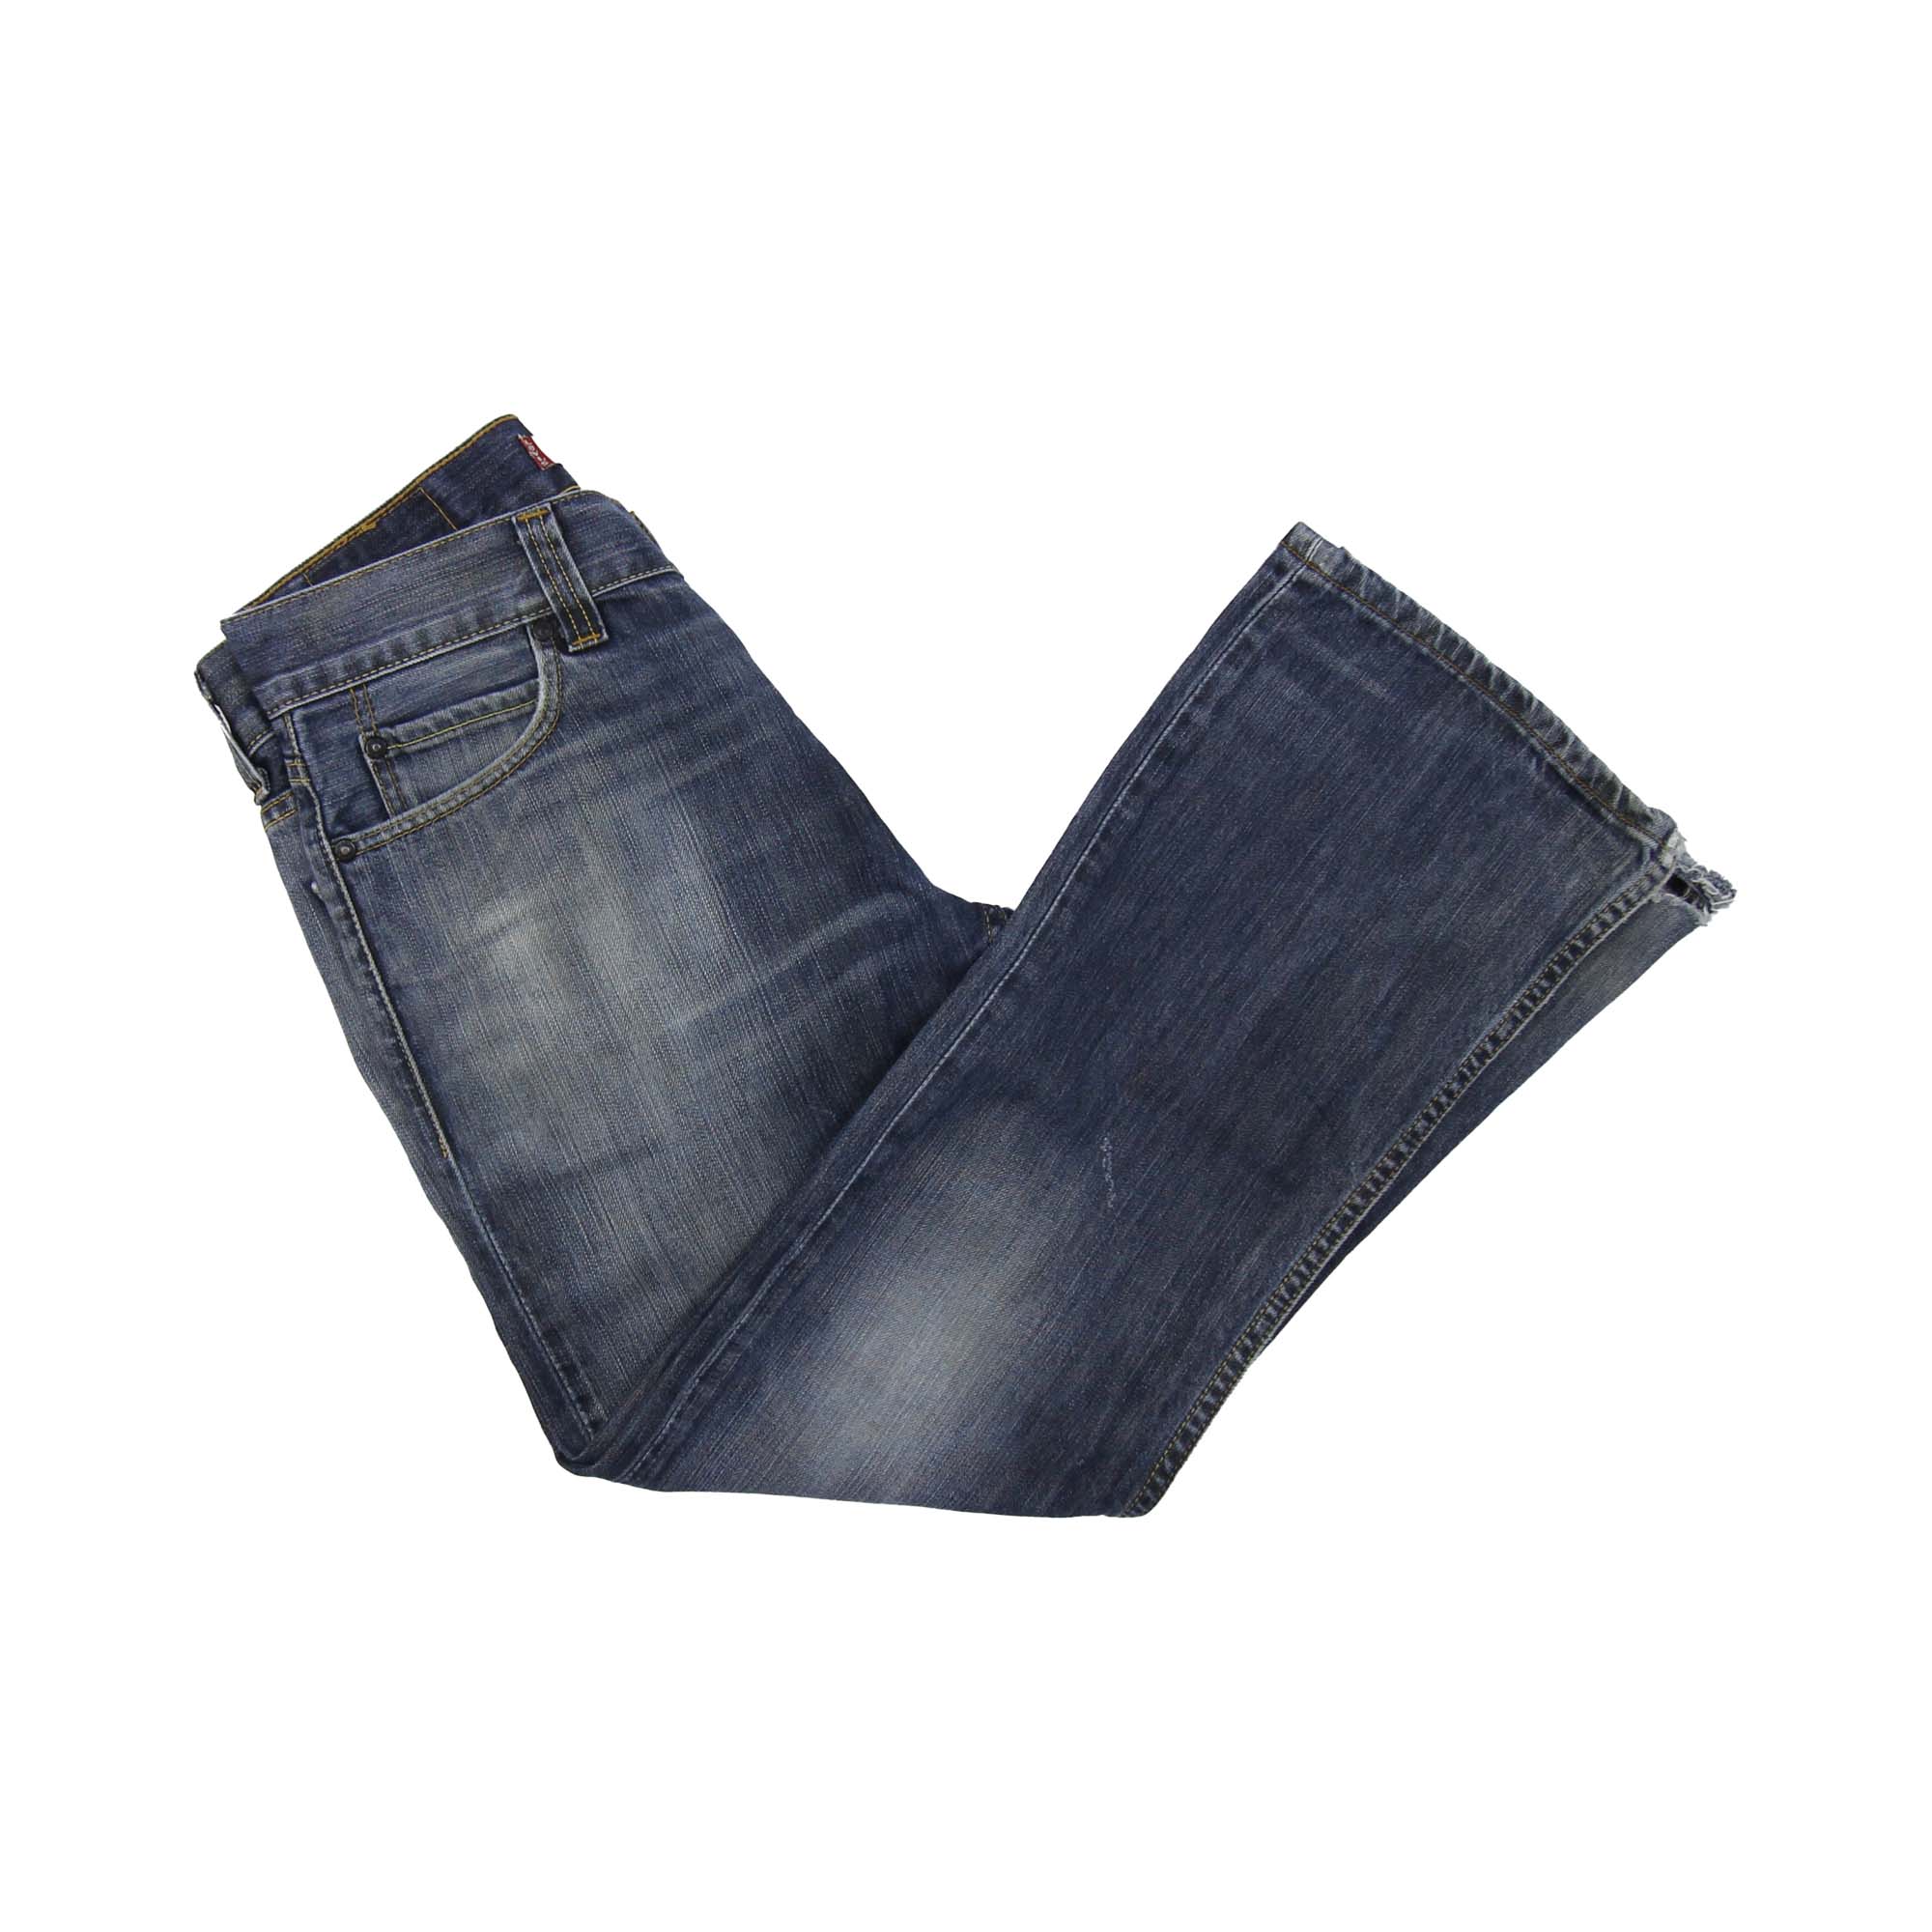 Levi's 512 Bootcut Jeans  -   W32 L30